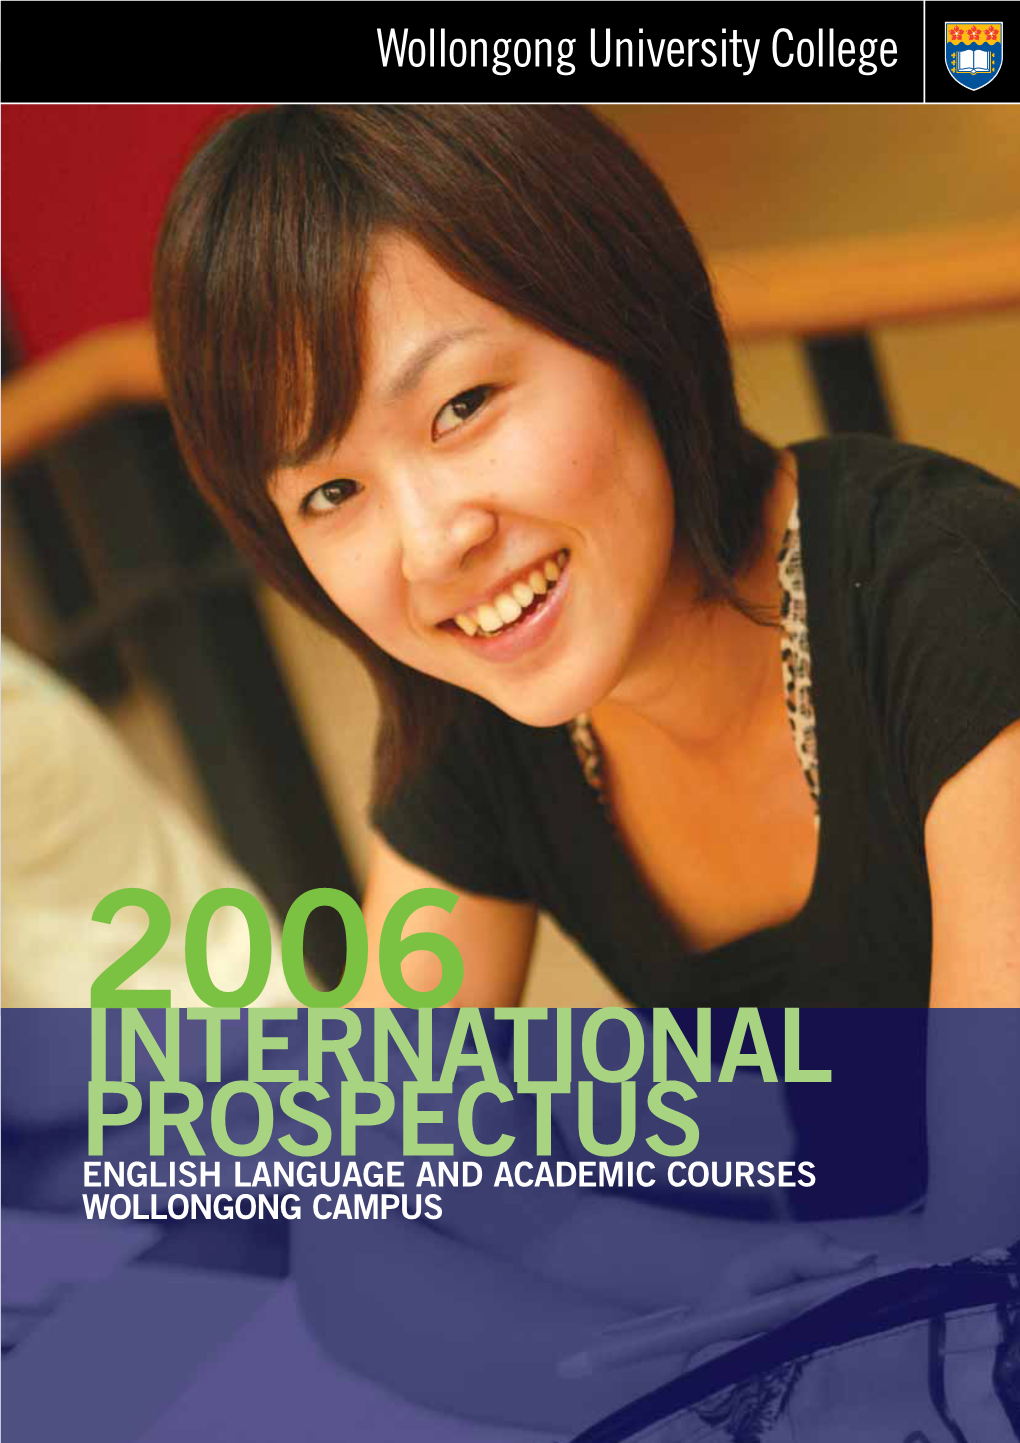 International Prospectus English Language and Academic Courses Wollongong Campus Contentswuc 2006 Prospectus